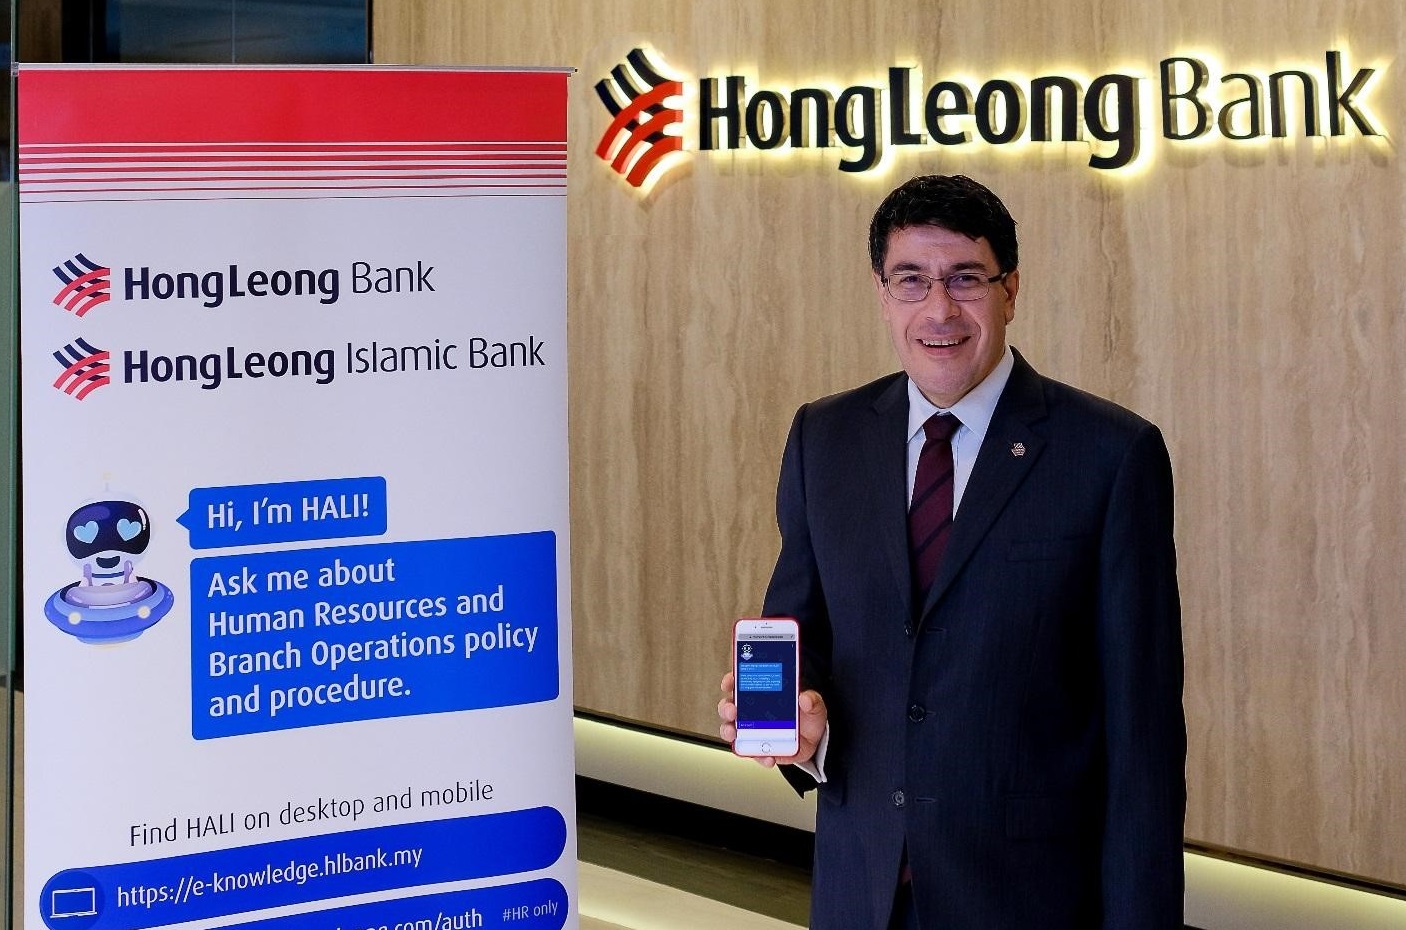 Hong Leong Bank introduces HALI chatbot with AI capabilities 